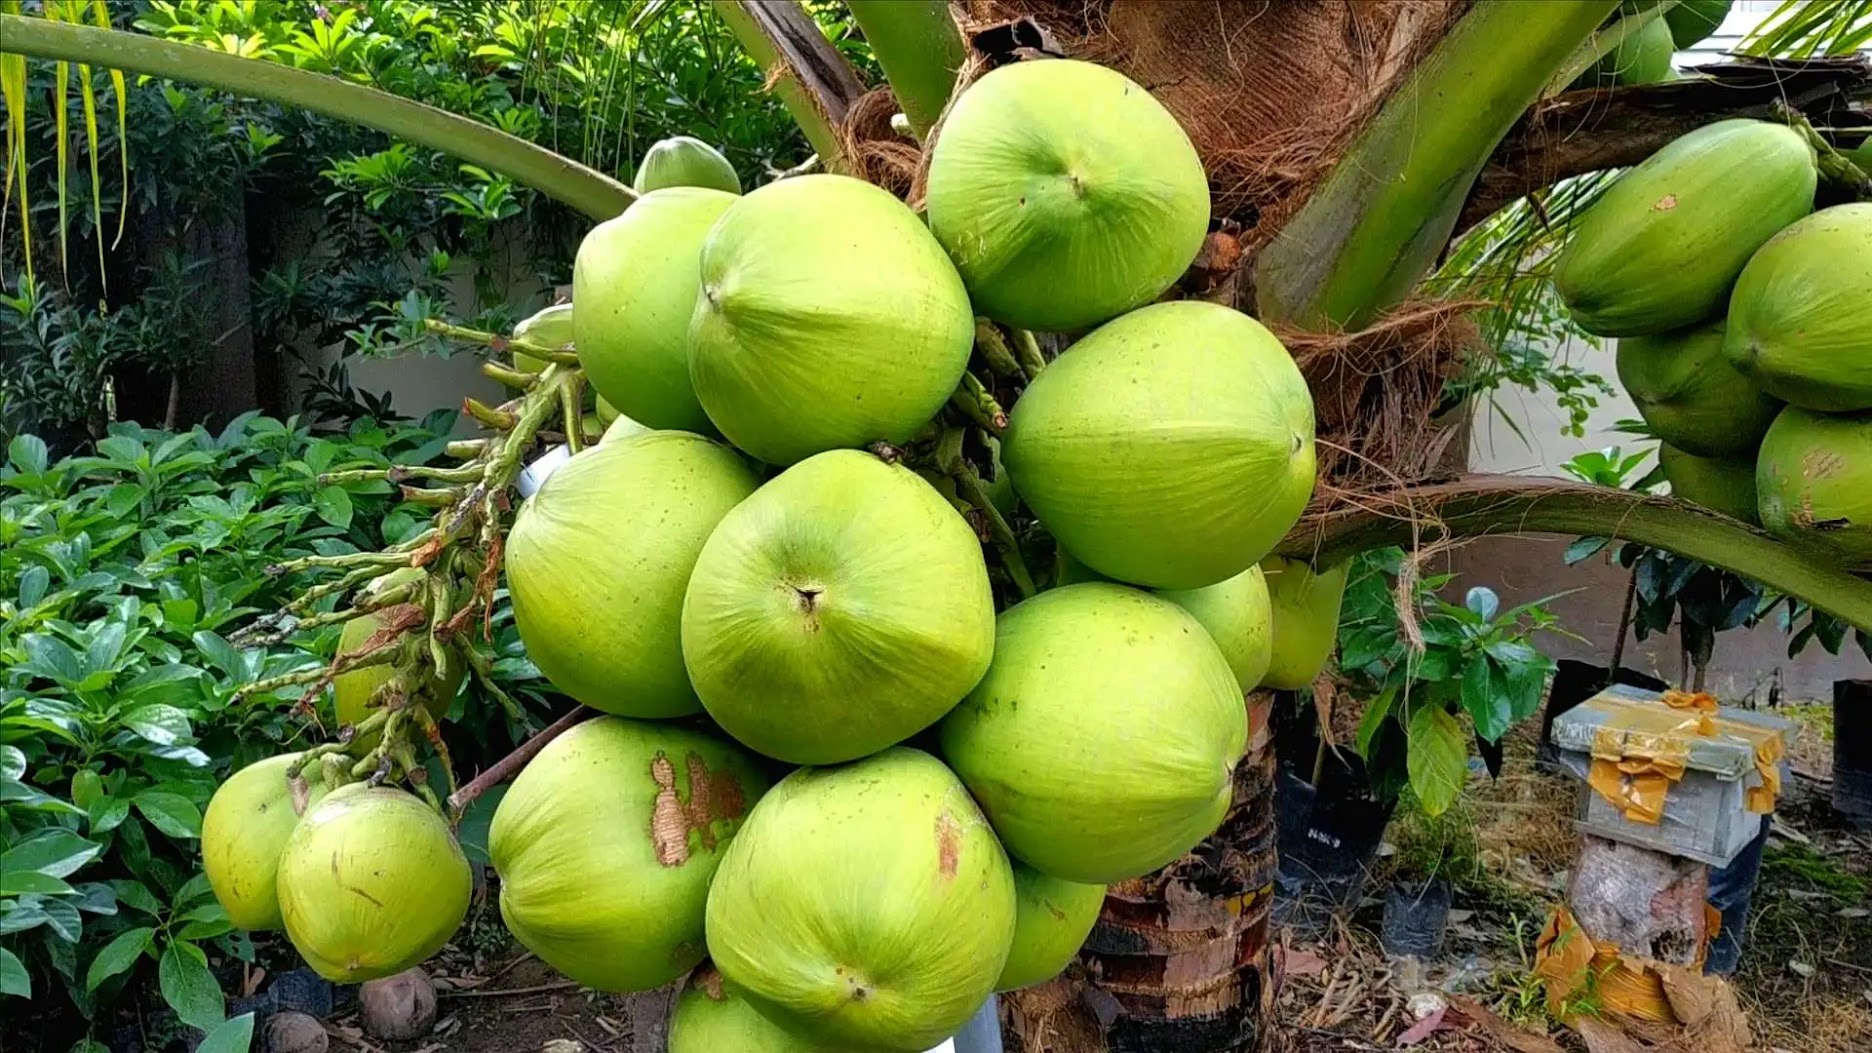 jual bibit kelapa pandan thailand import asli cepat sekali berbuah Sulawesi Tenggara